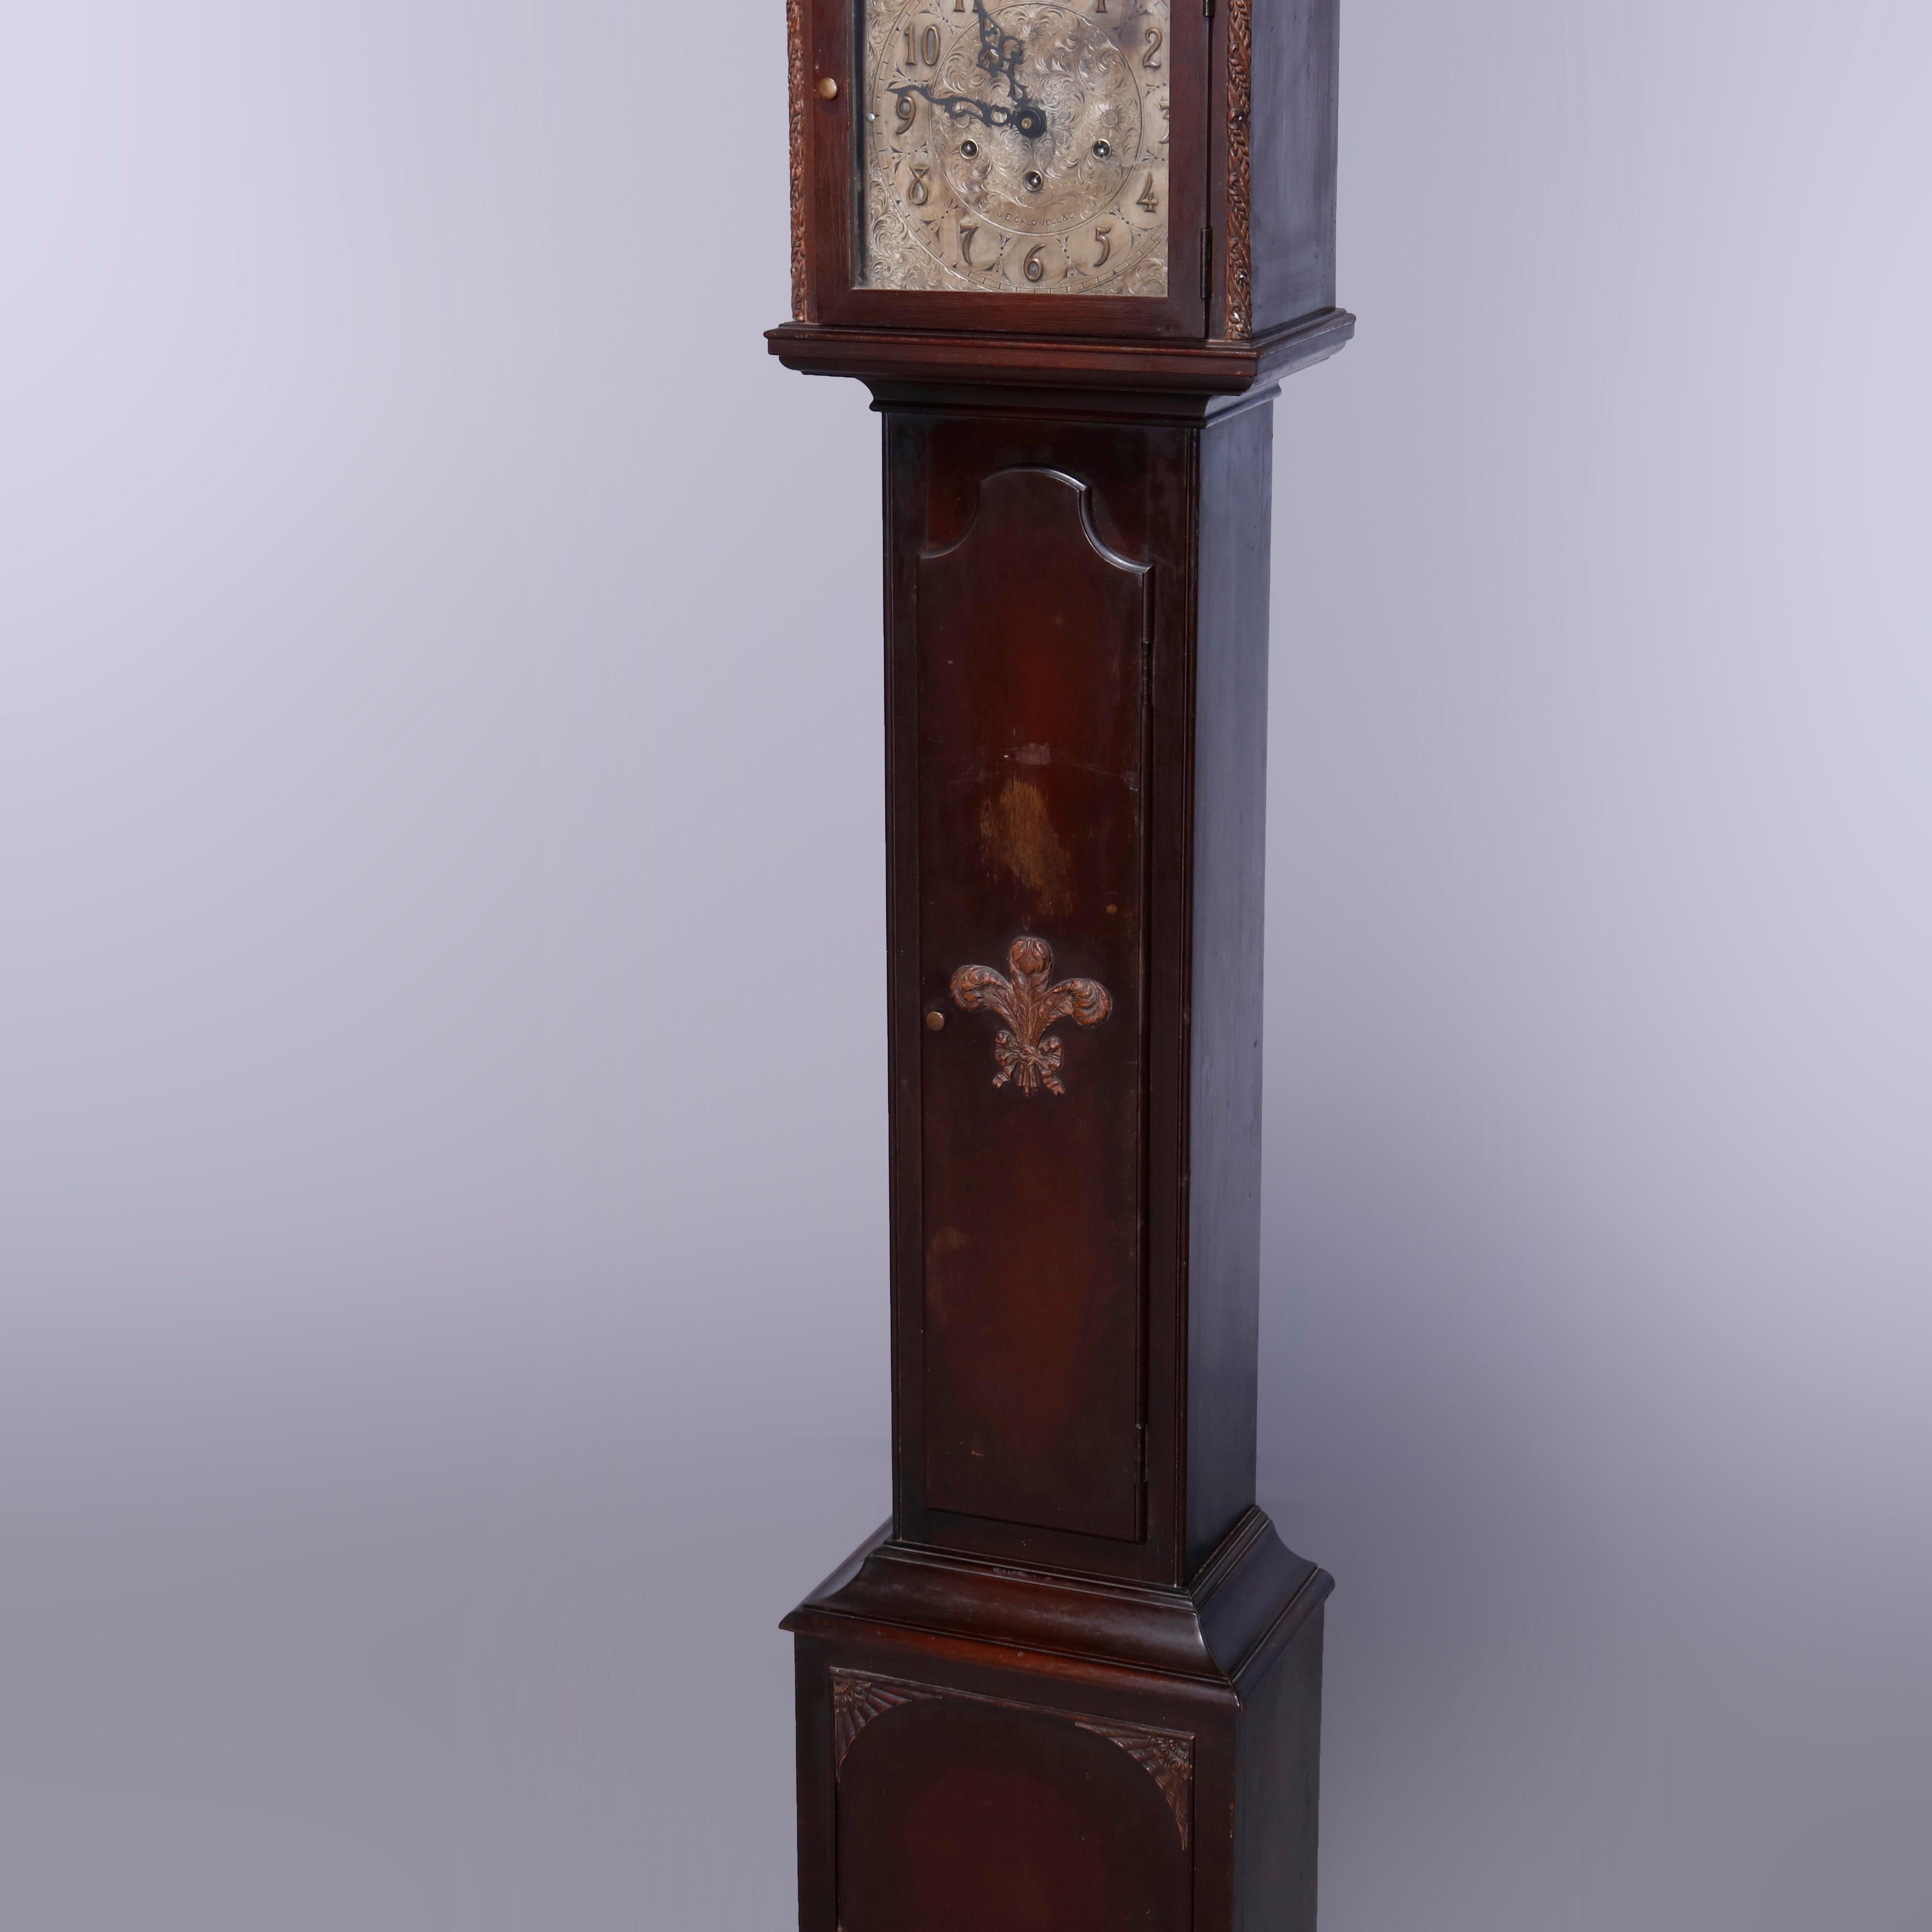 Carved Antique Diminutive German Caldwell & Co. Mahogany Grandmother's Clock, c1900